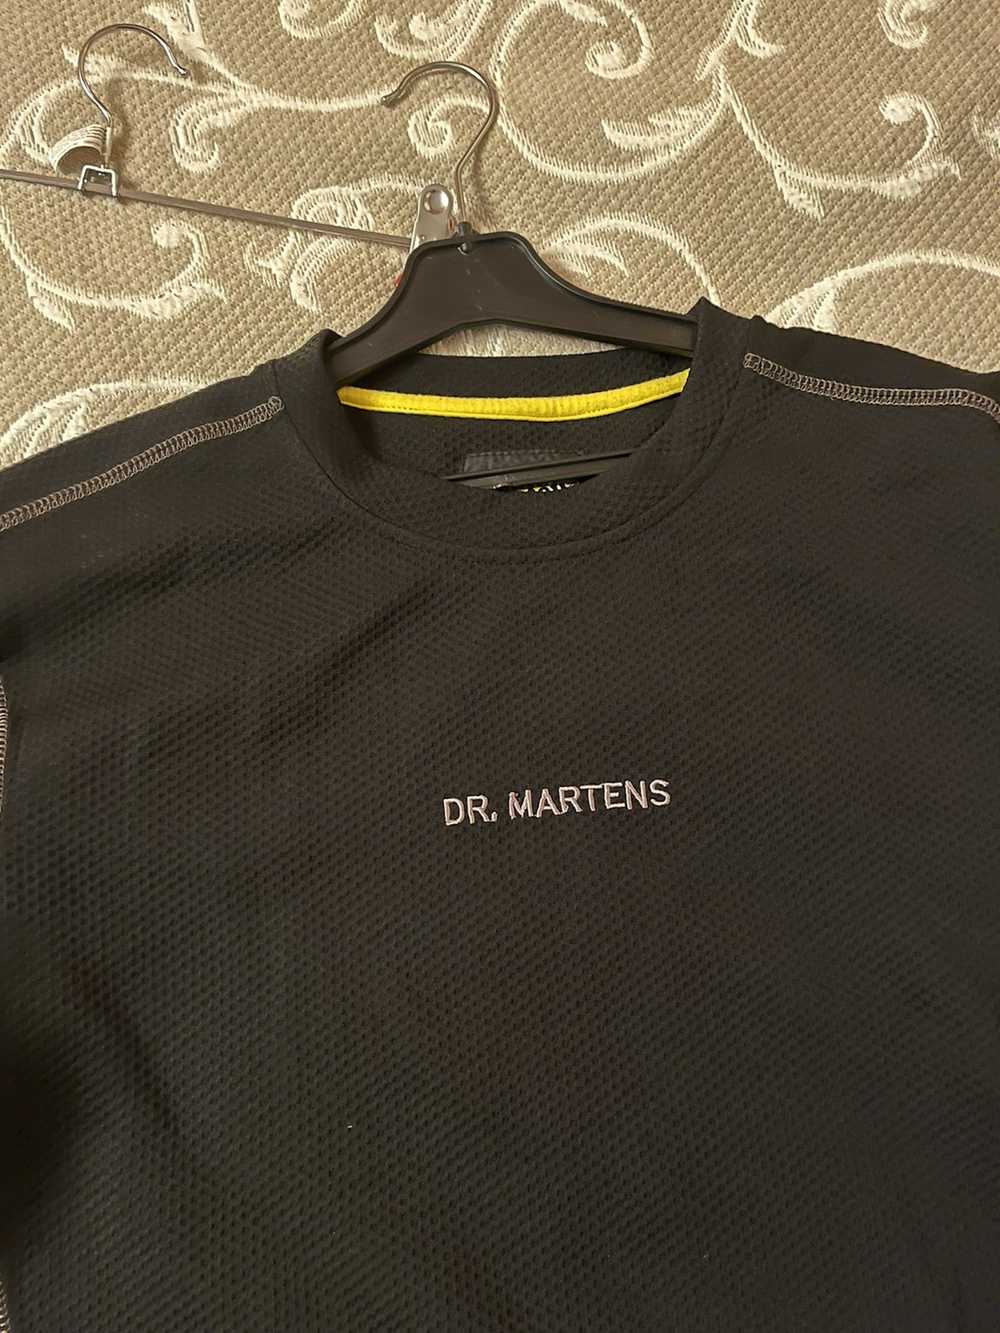 Dr. Martens × Streetwear Dr Martens logo tshirt - image 2